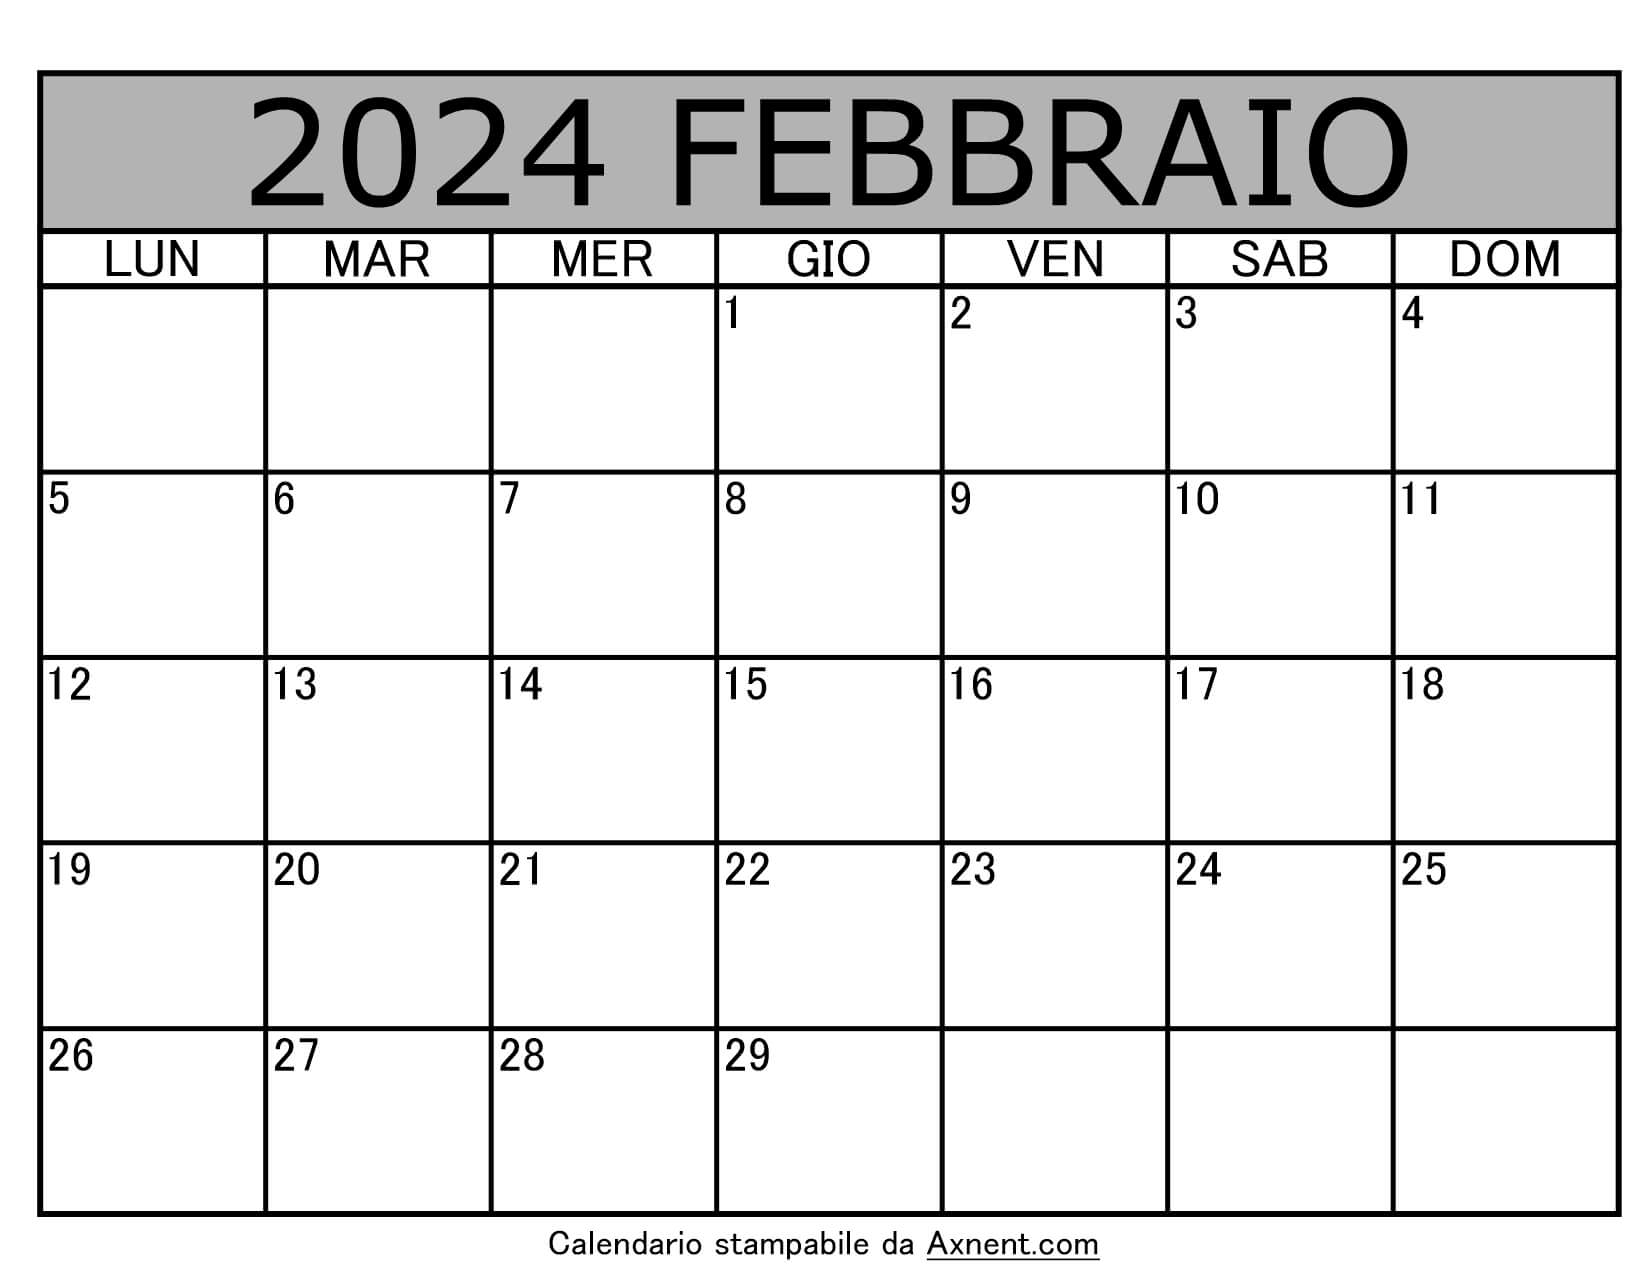 Calendario Mensile di Febbraio 2024